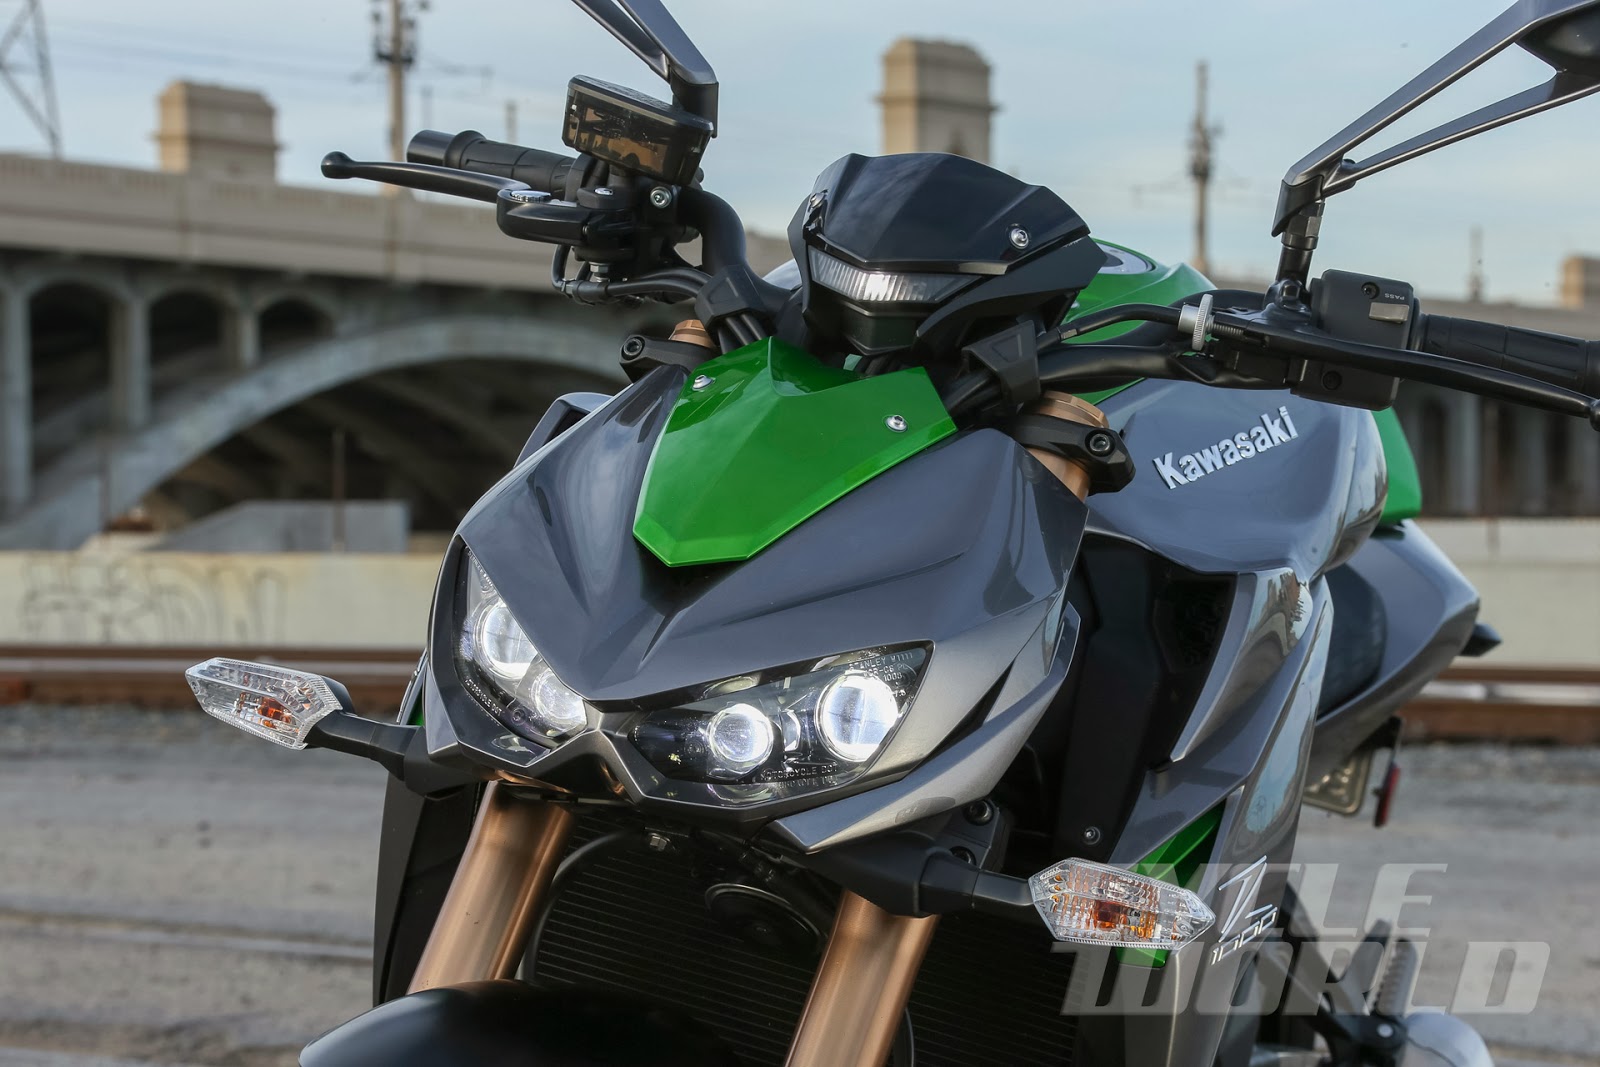 2014-Kawasaki-Z1000-ABS-detail-front-section.jpg